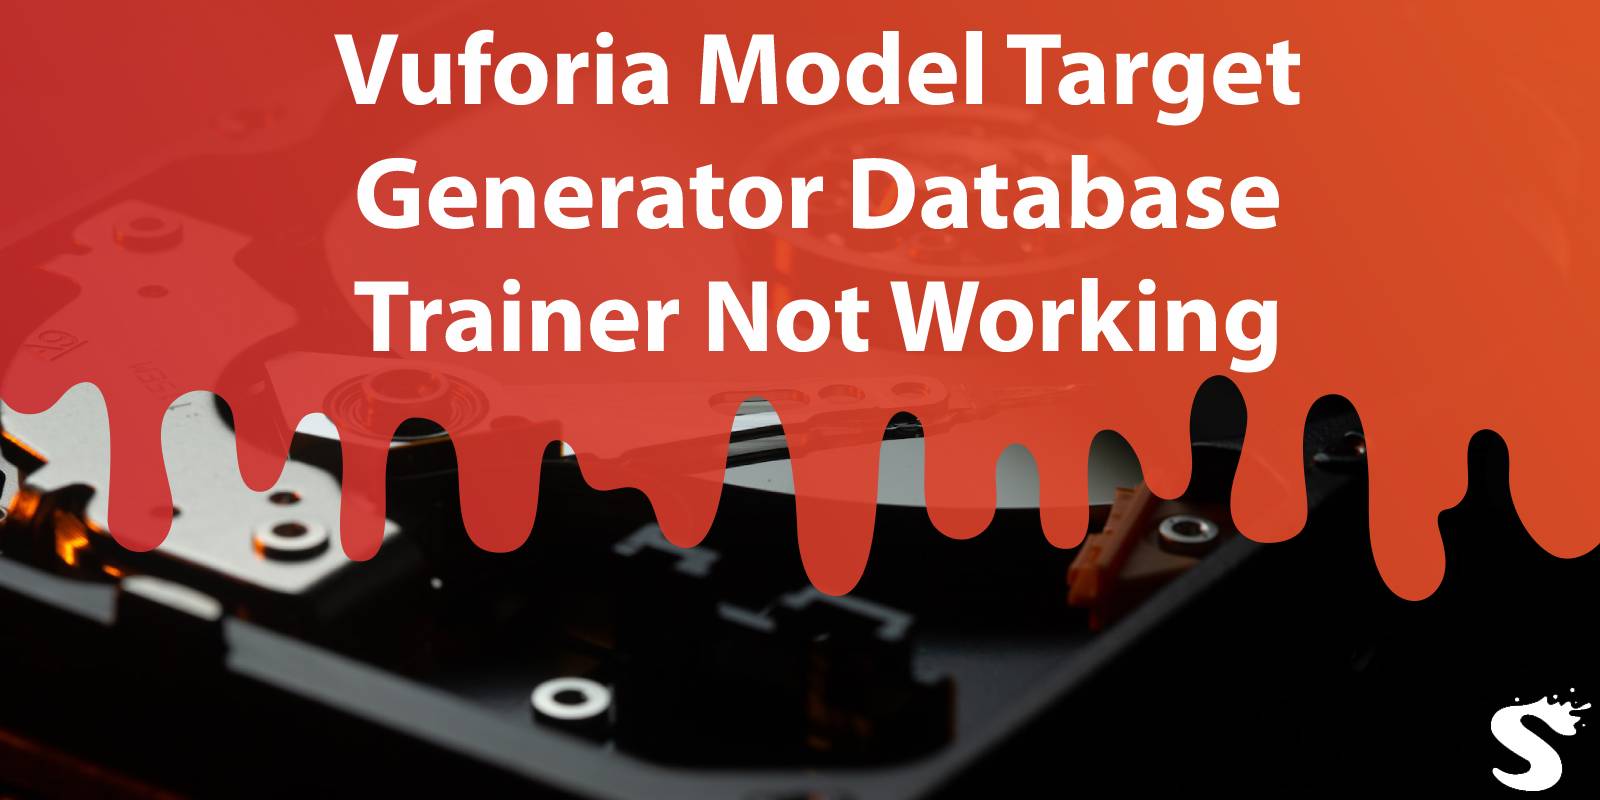 Vuforia Model Target Generator Database Trainer Not Working